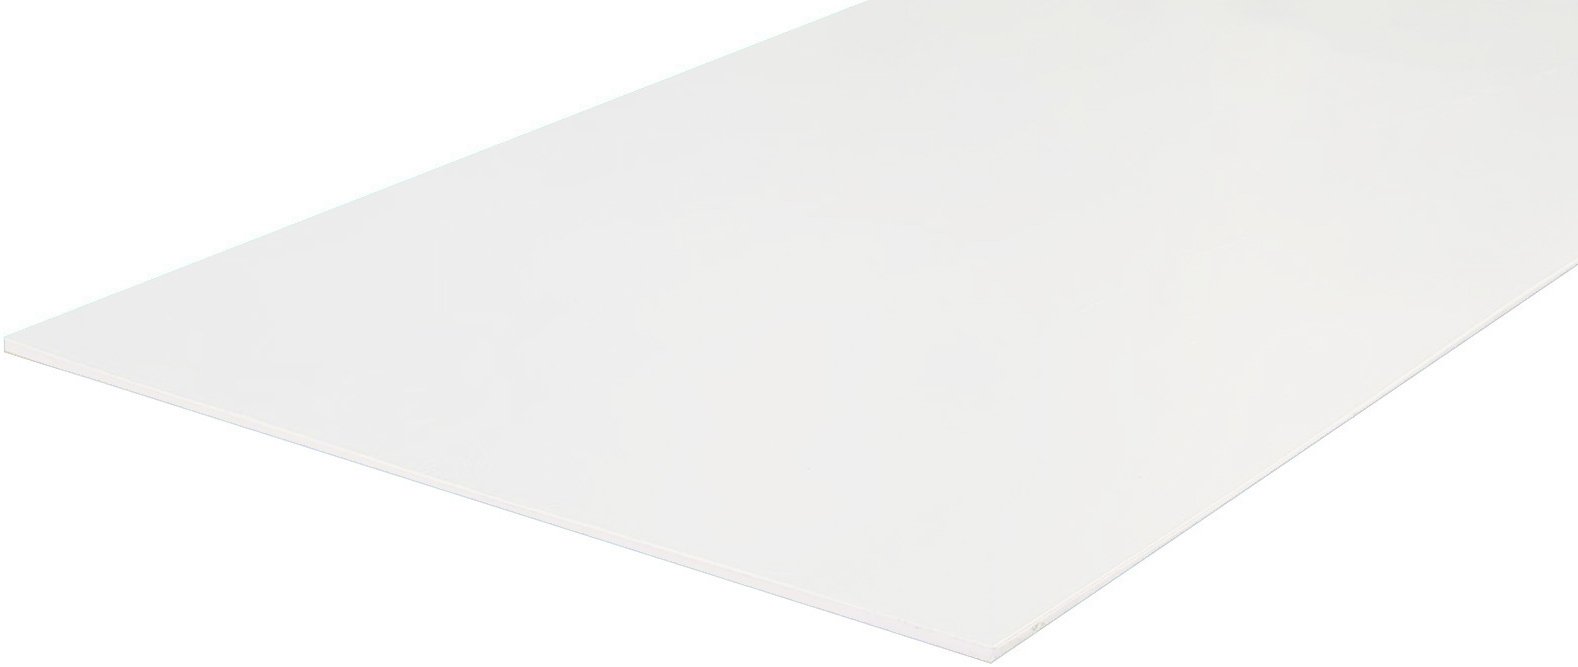 Жесткий ПВХ лист бел. мат. 0,8 мм (2000×3000) RS-Rigid